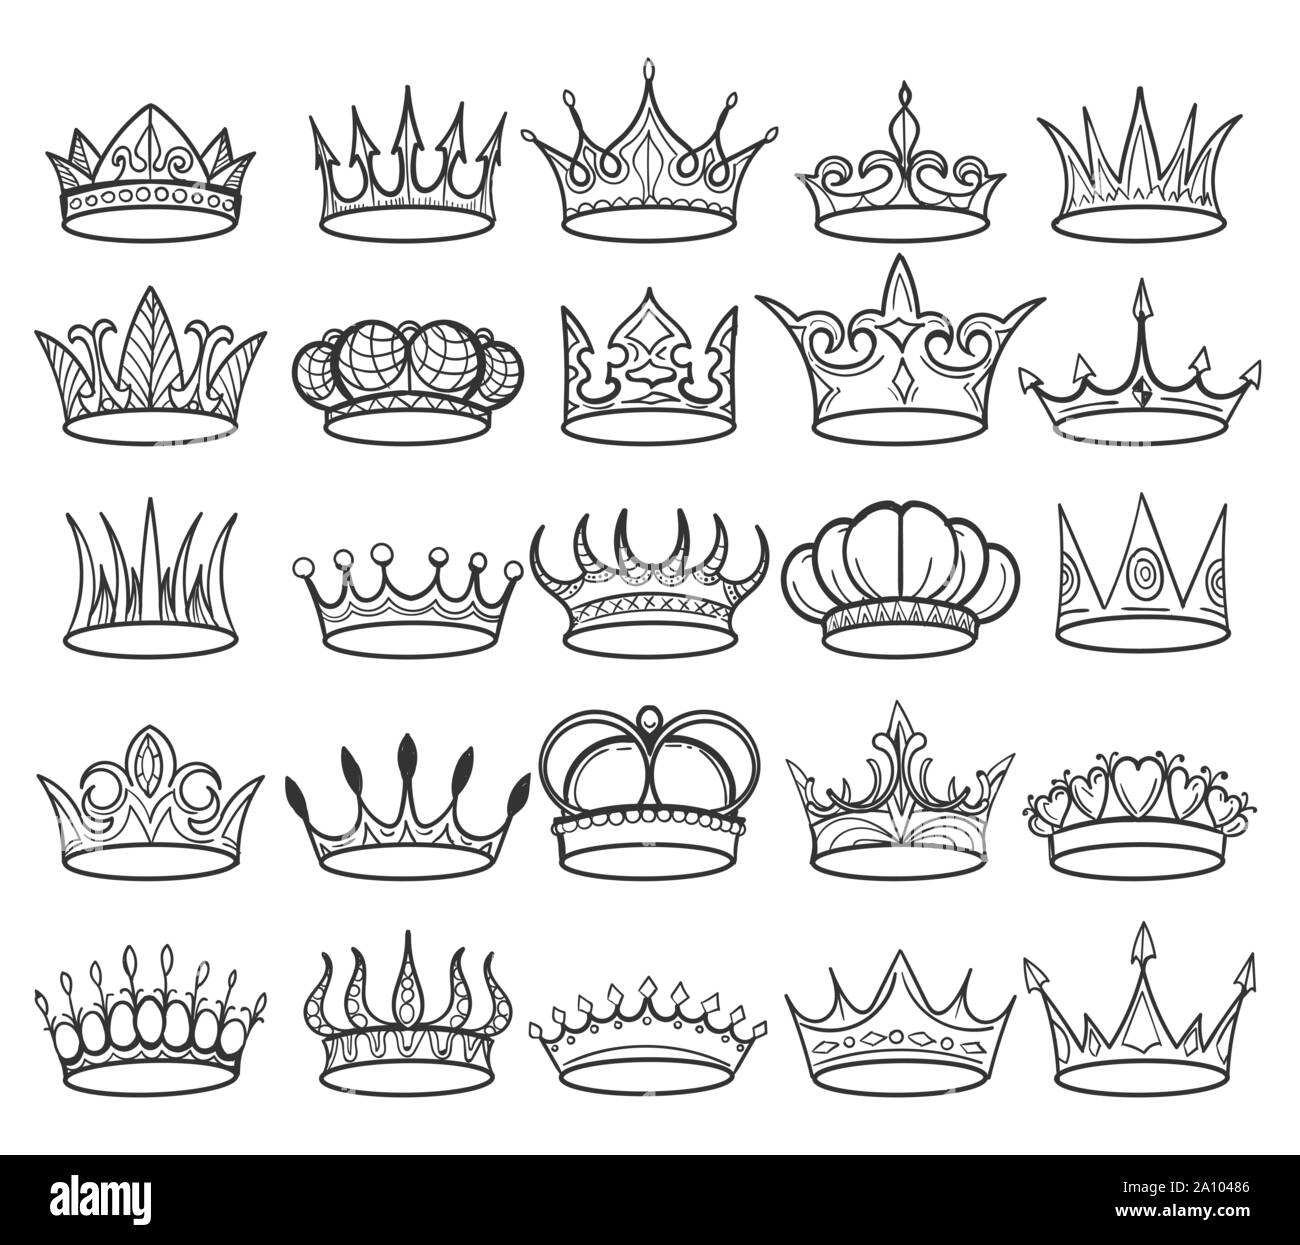 Premium Crown Vector Doodle Style King Queen Crown Sketch Outlines Stock  Vector by ©Artjita 483284318